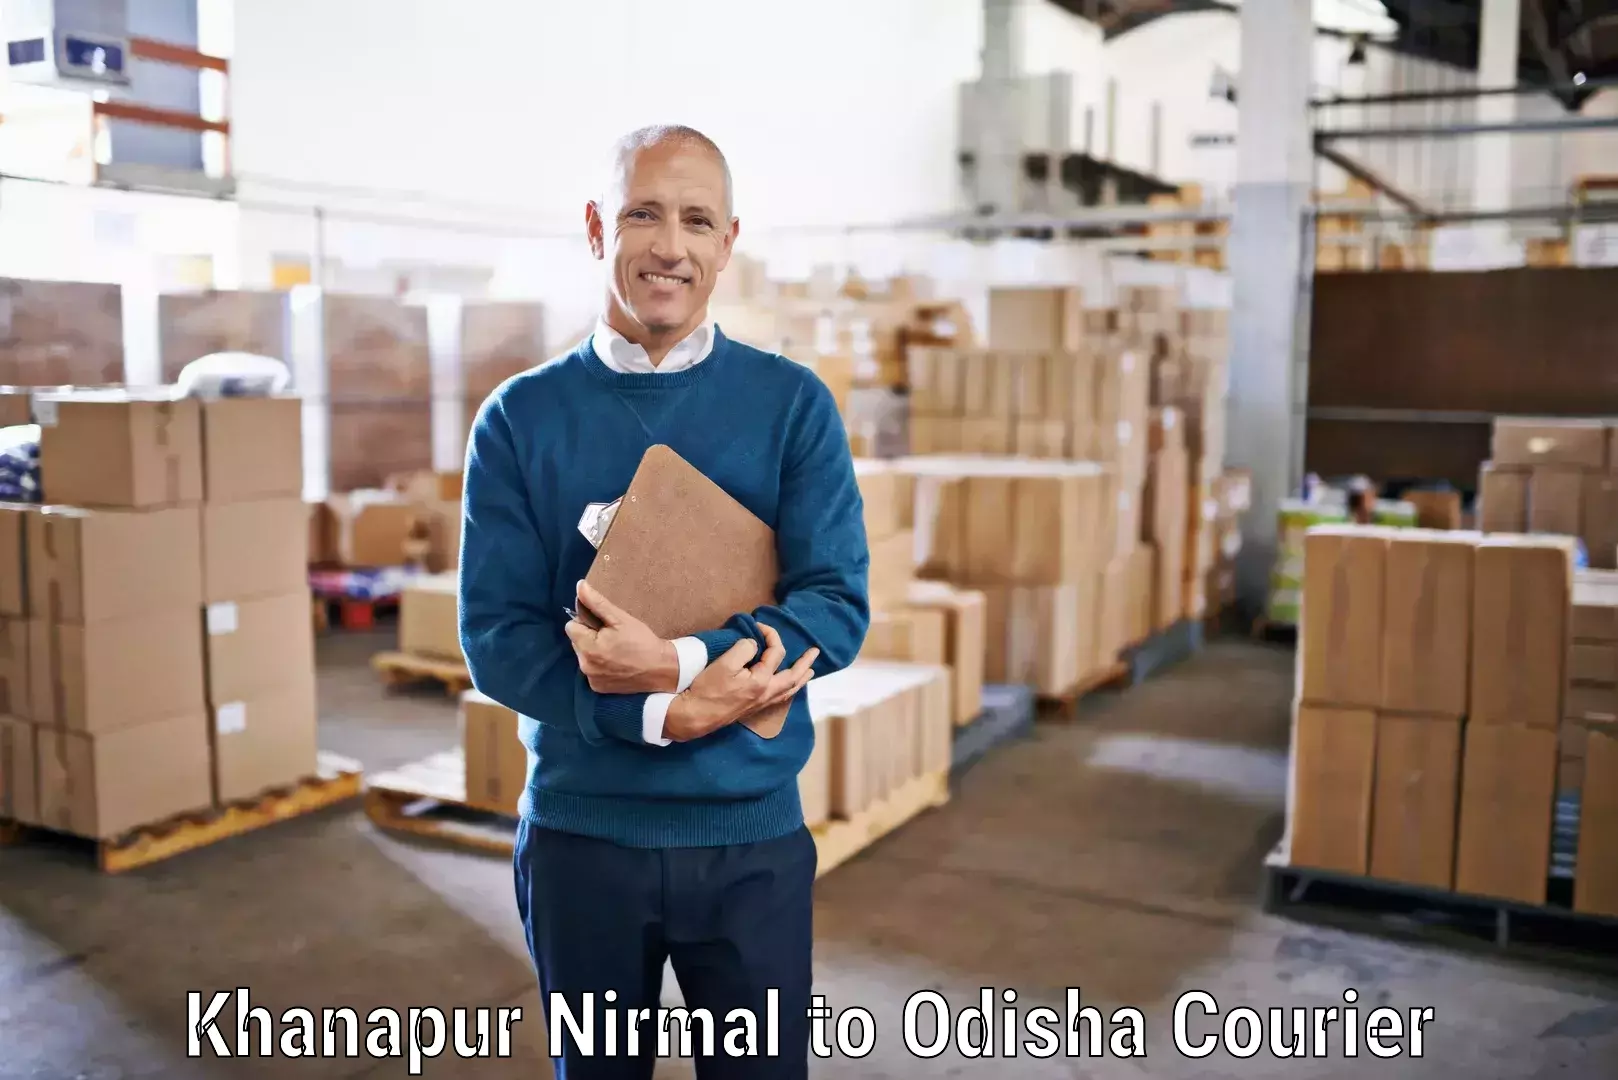 Nationwide parcel services Khanapur Nirmal to Hinjilicut